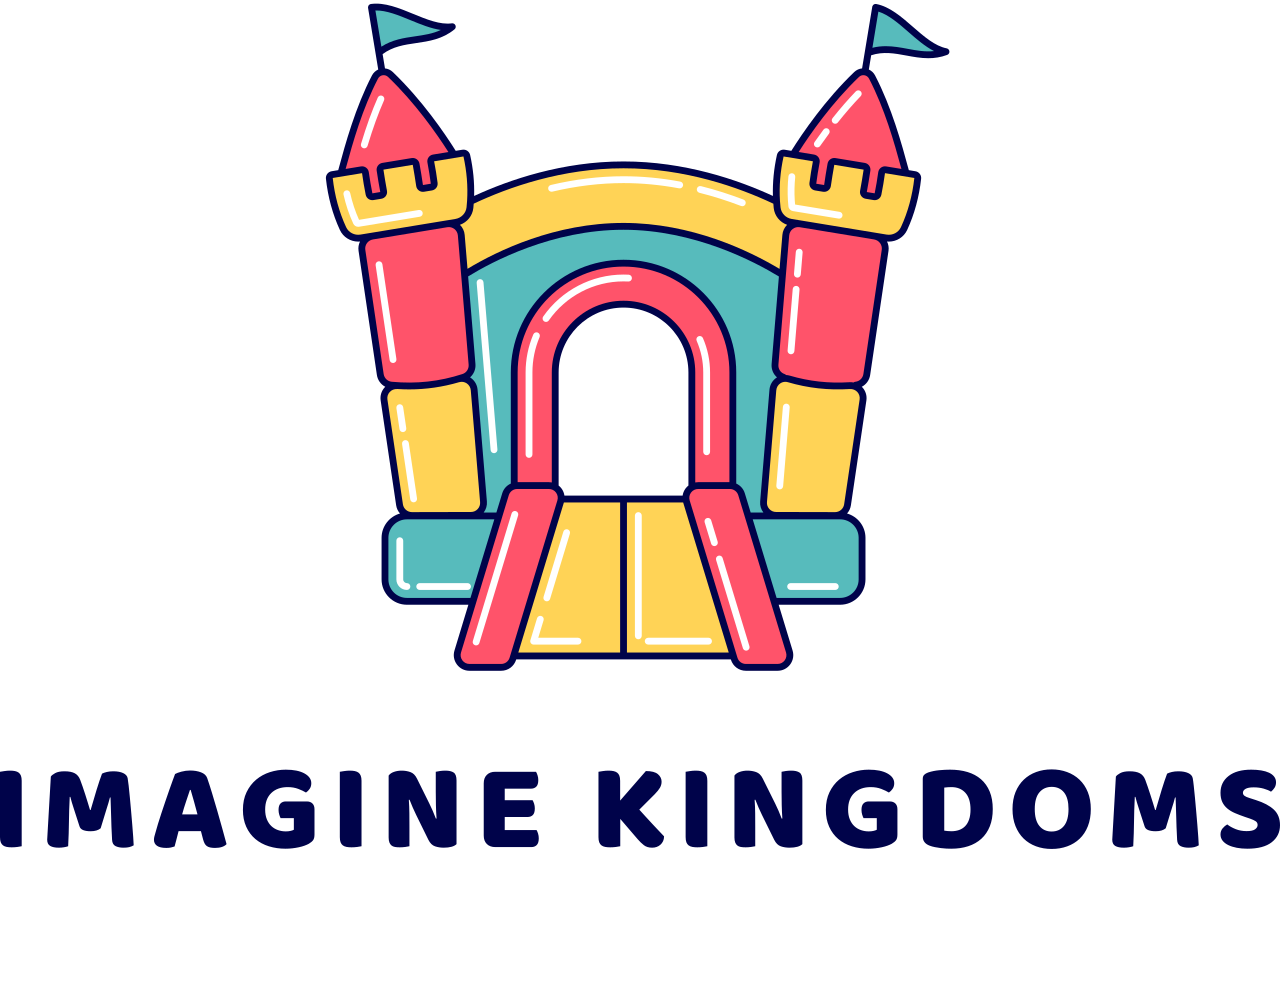 Imagine Kingdoms 's logo